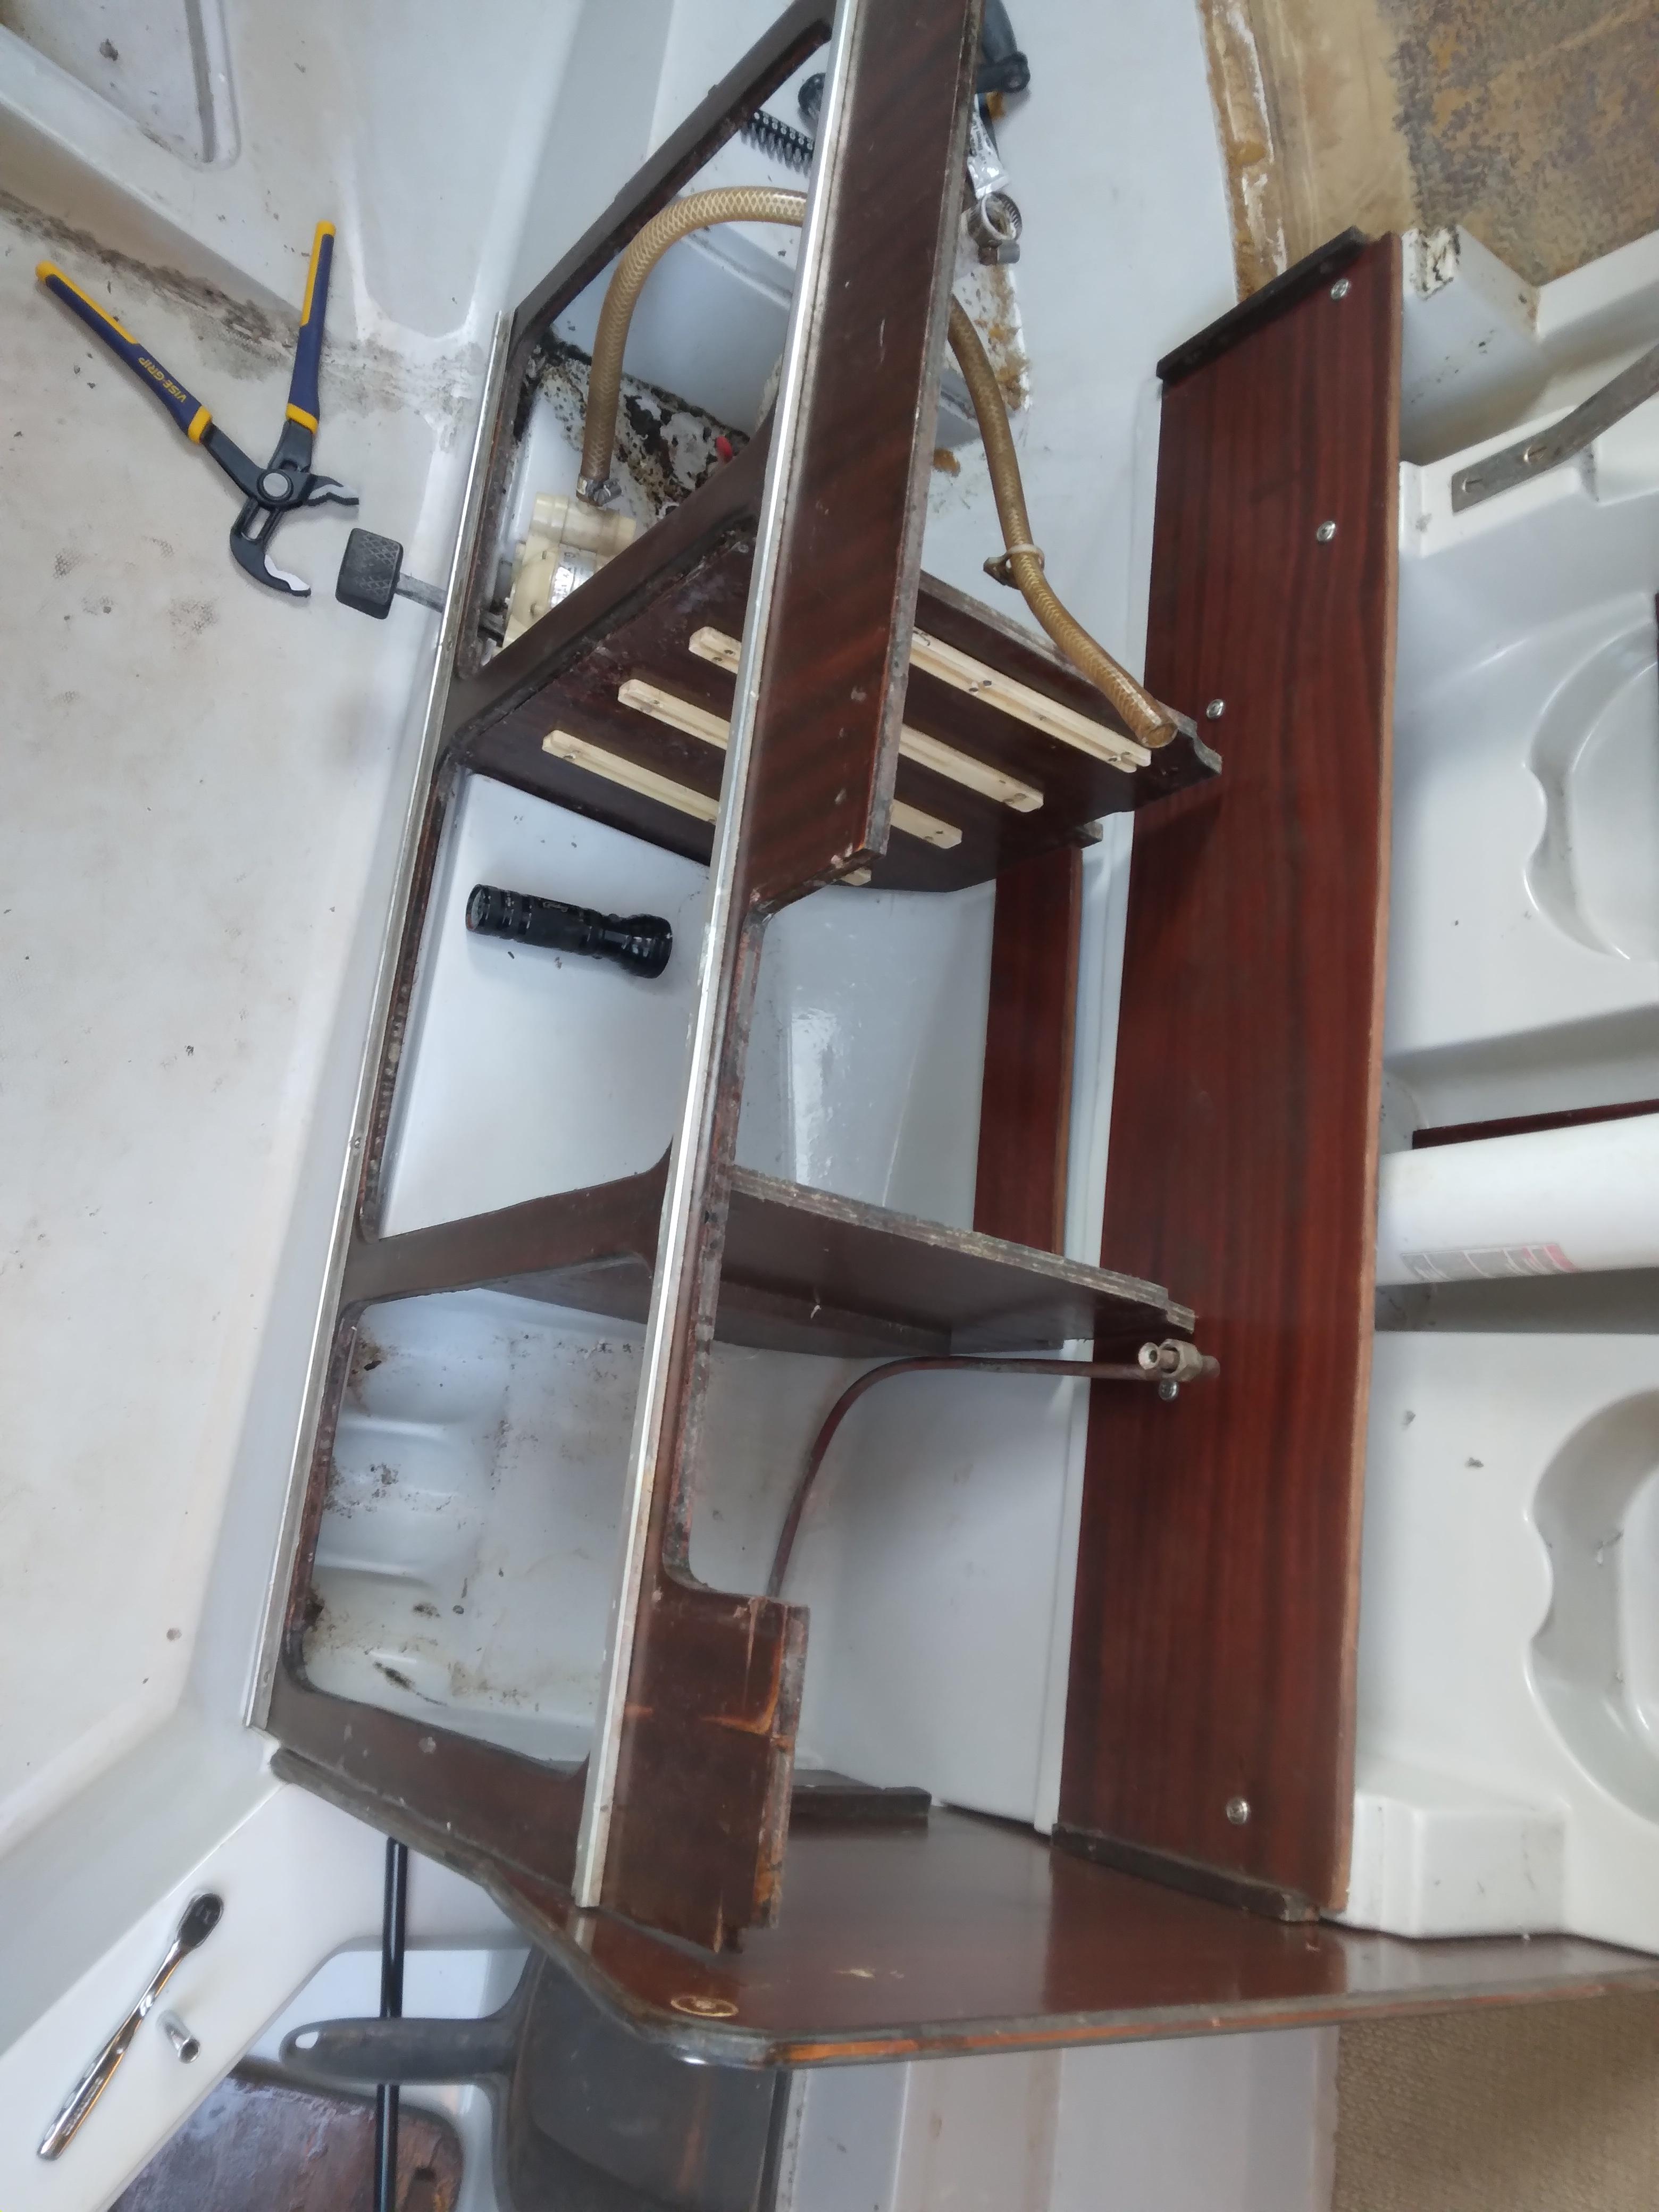 removal of original sink/stovetop